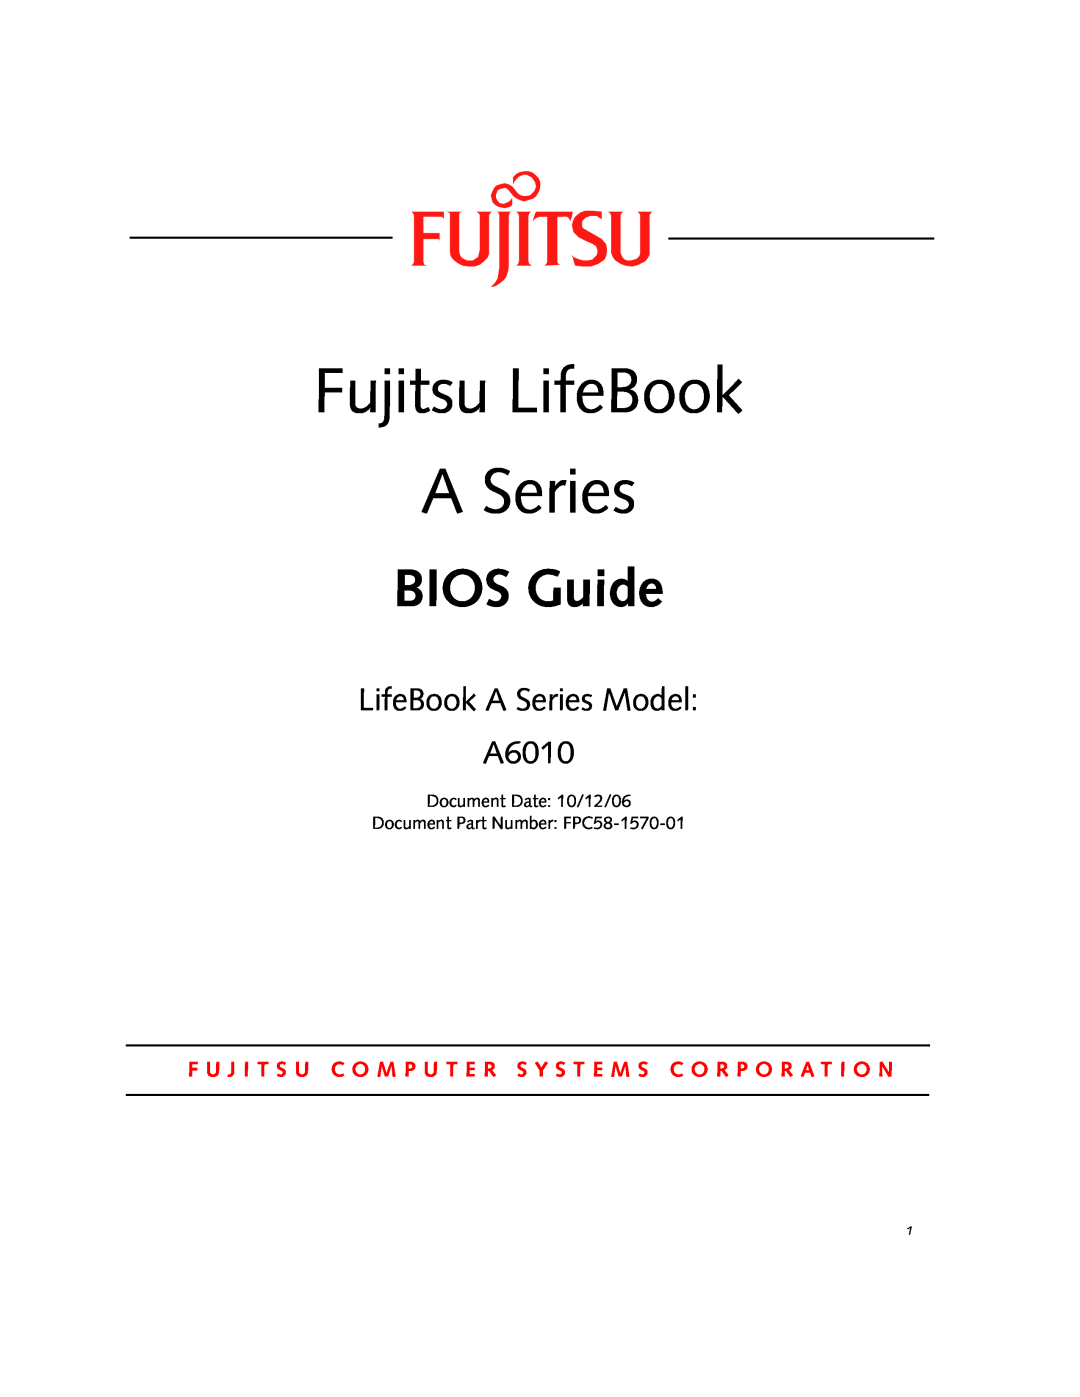 Fujitsu manual Fujitsu LifeBook A Series, BIOS Guide, LifeBook A Series Model A6010 